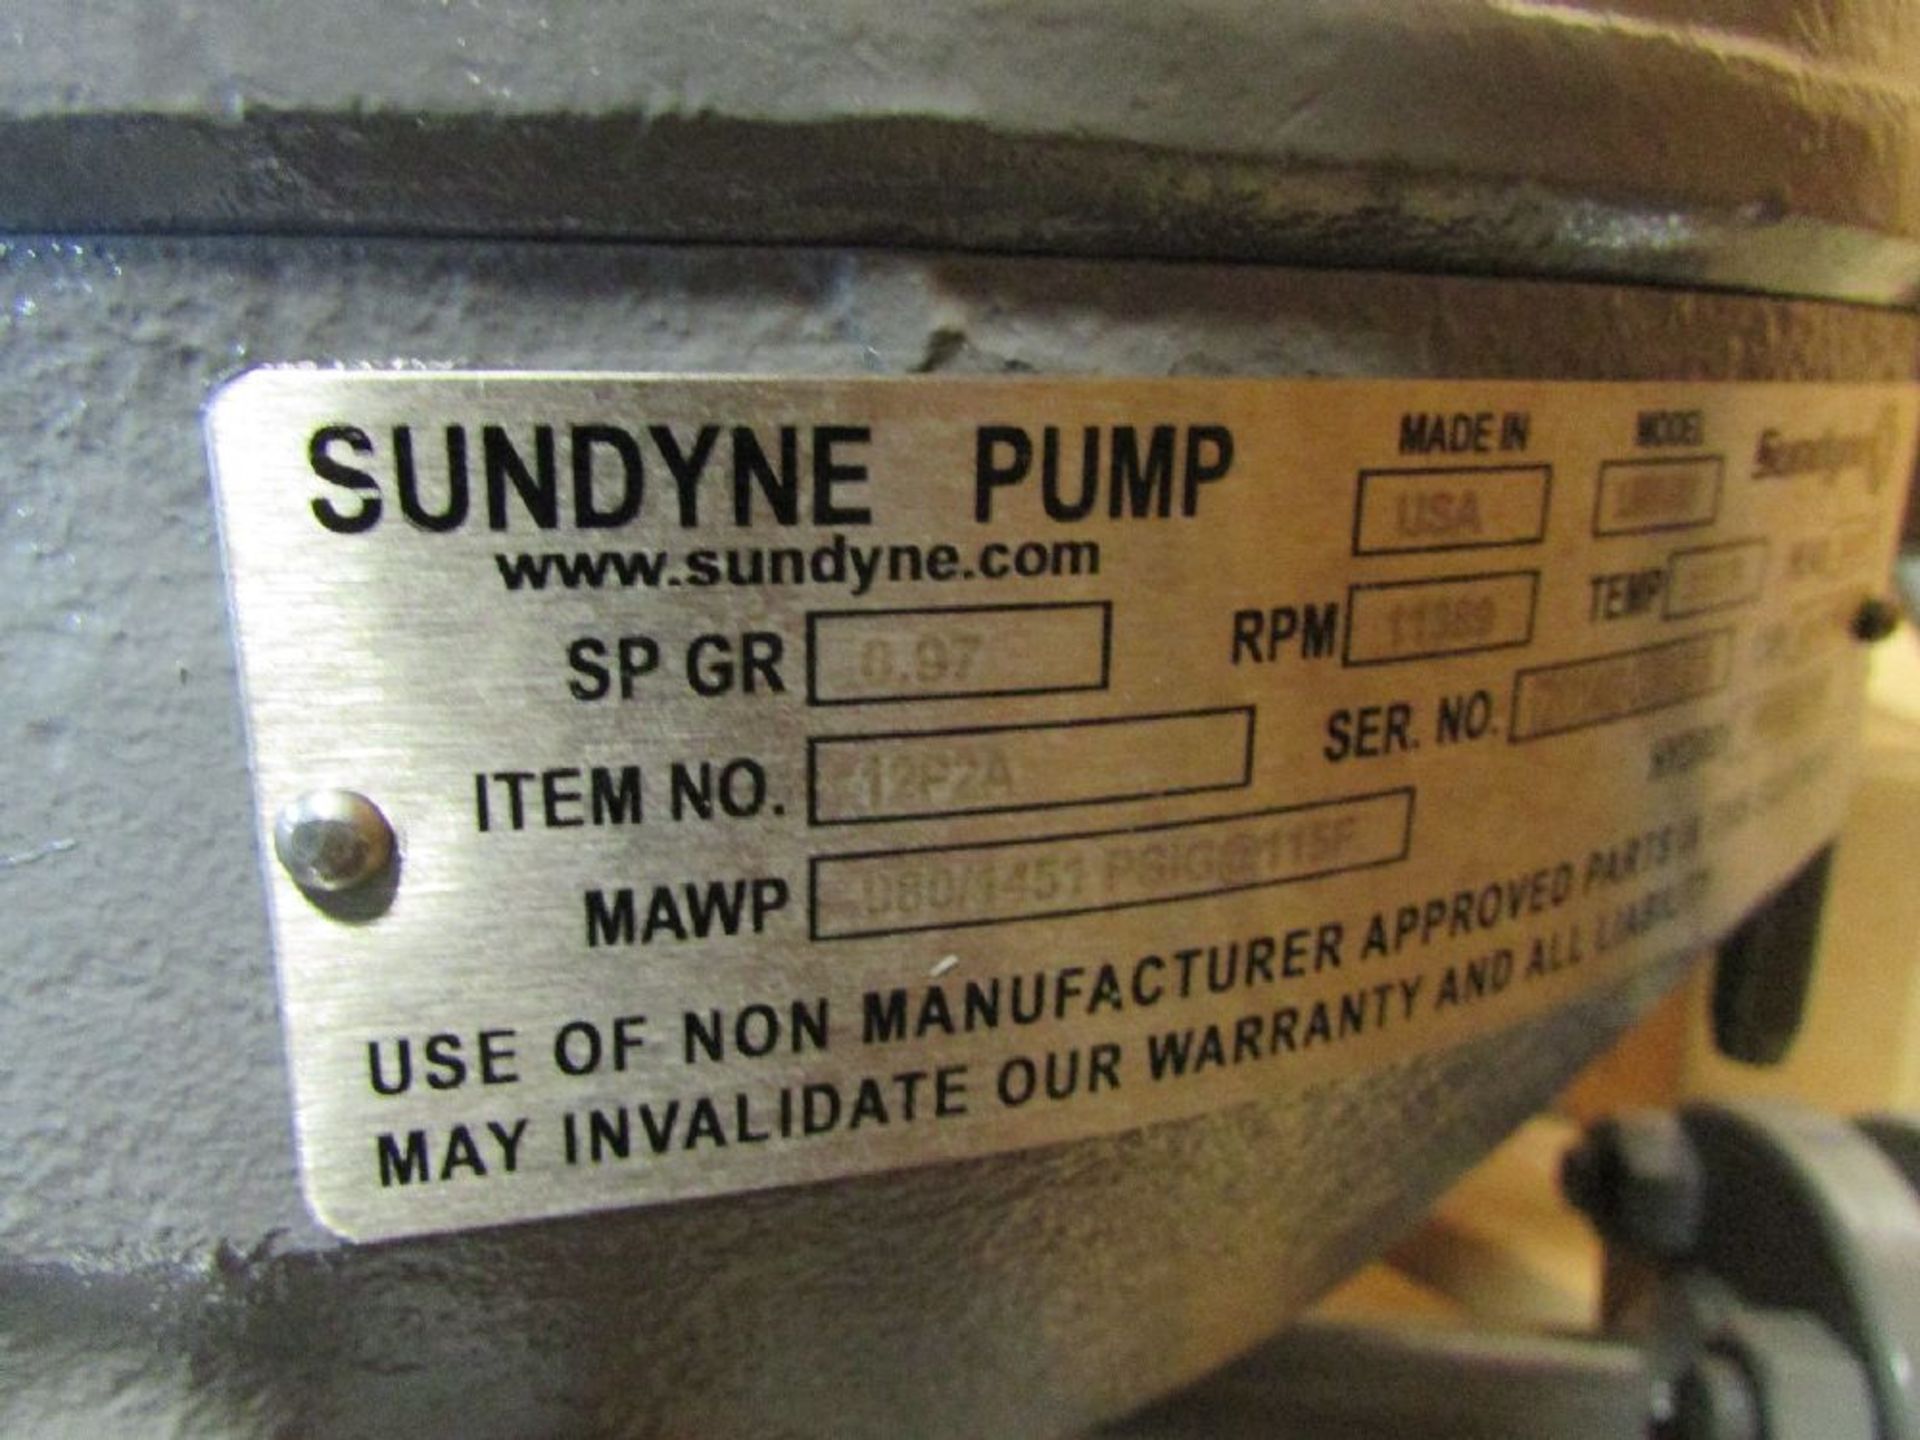 Sundyne Model LMV311 45 GPM Centrifugal Pump - Image 5 of 8